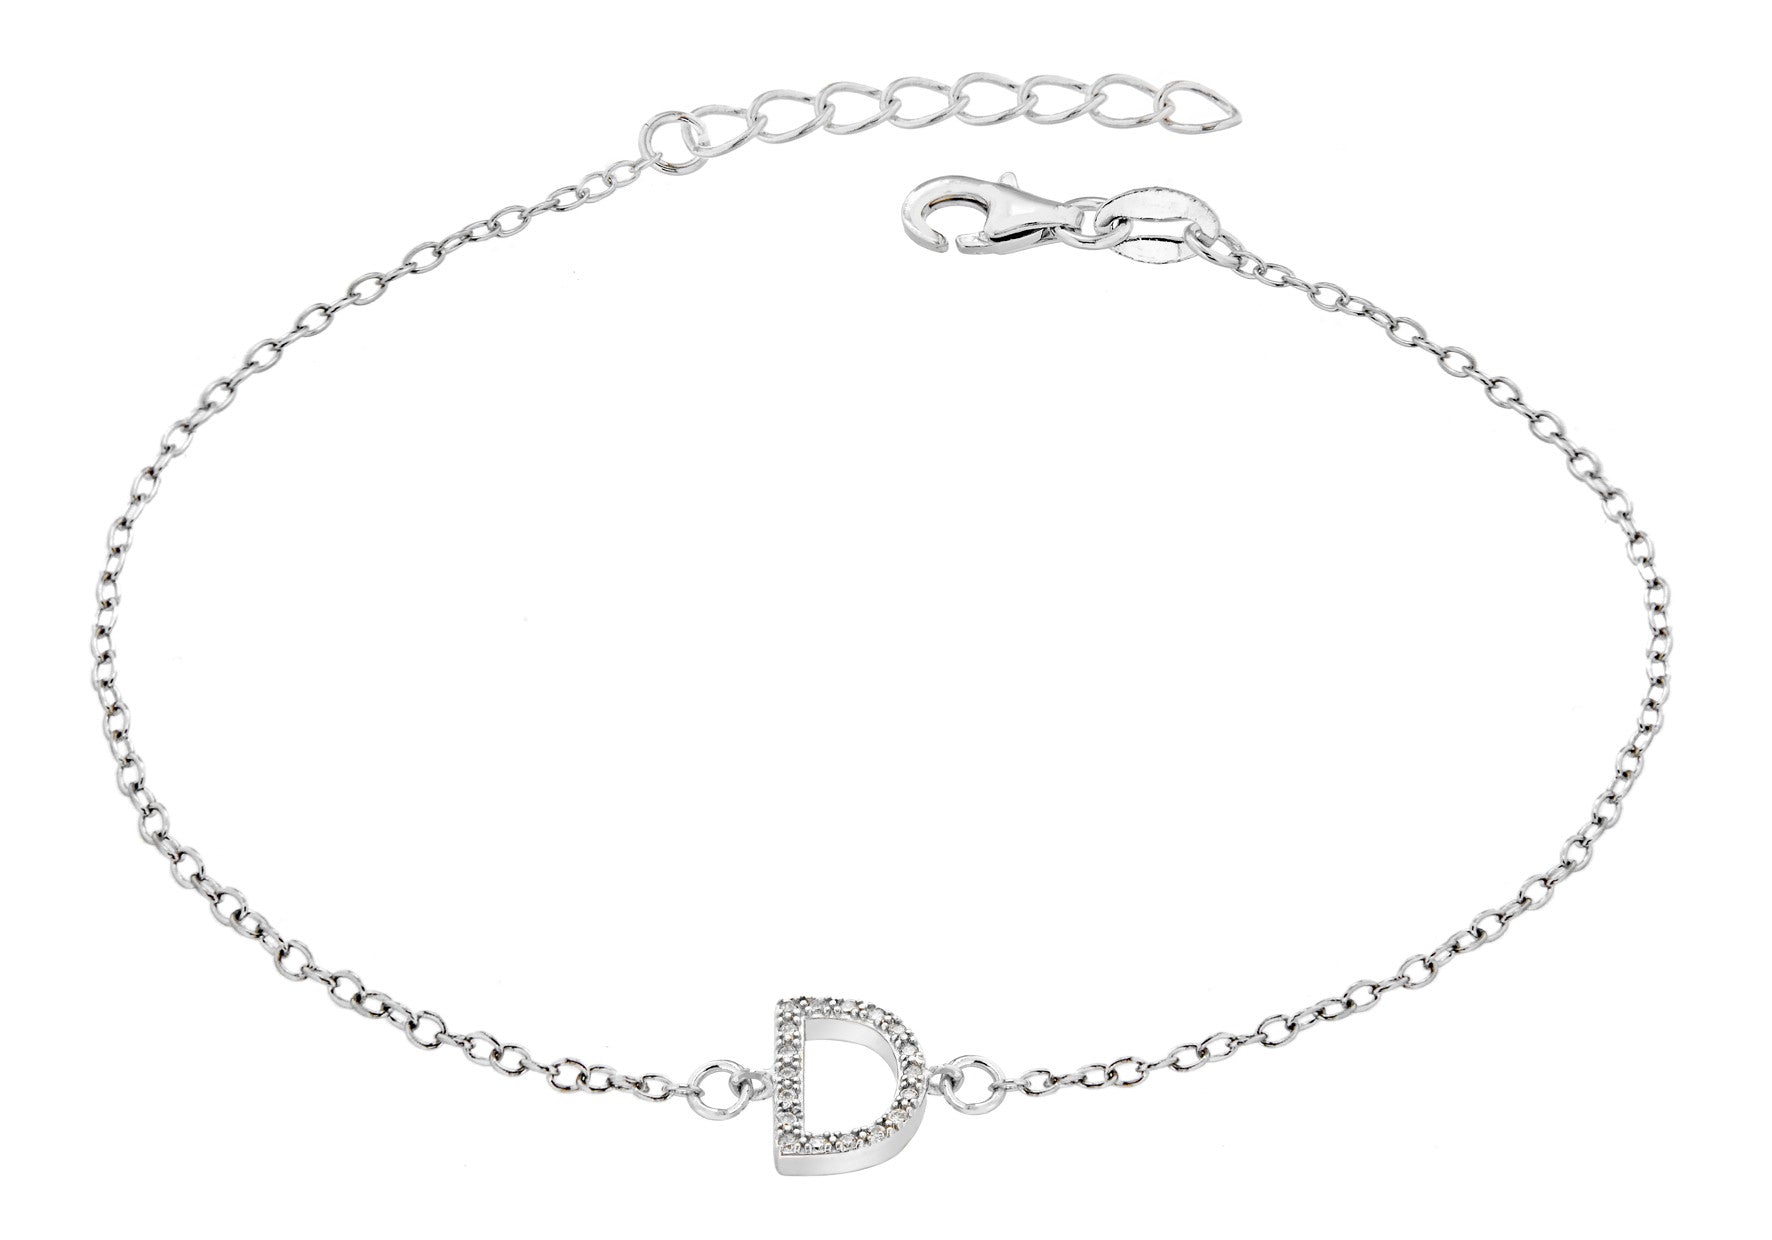 THENAME letter R crystal bracelet in silver